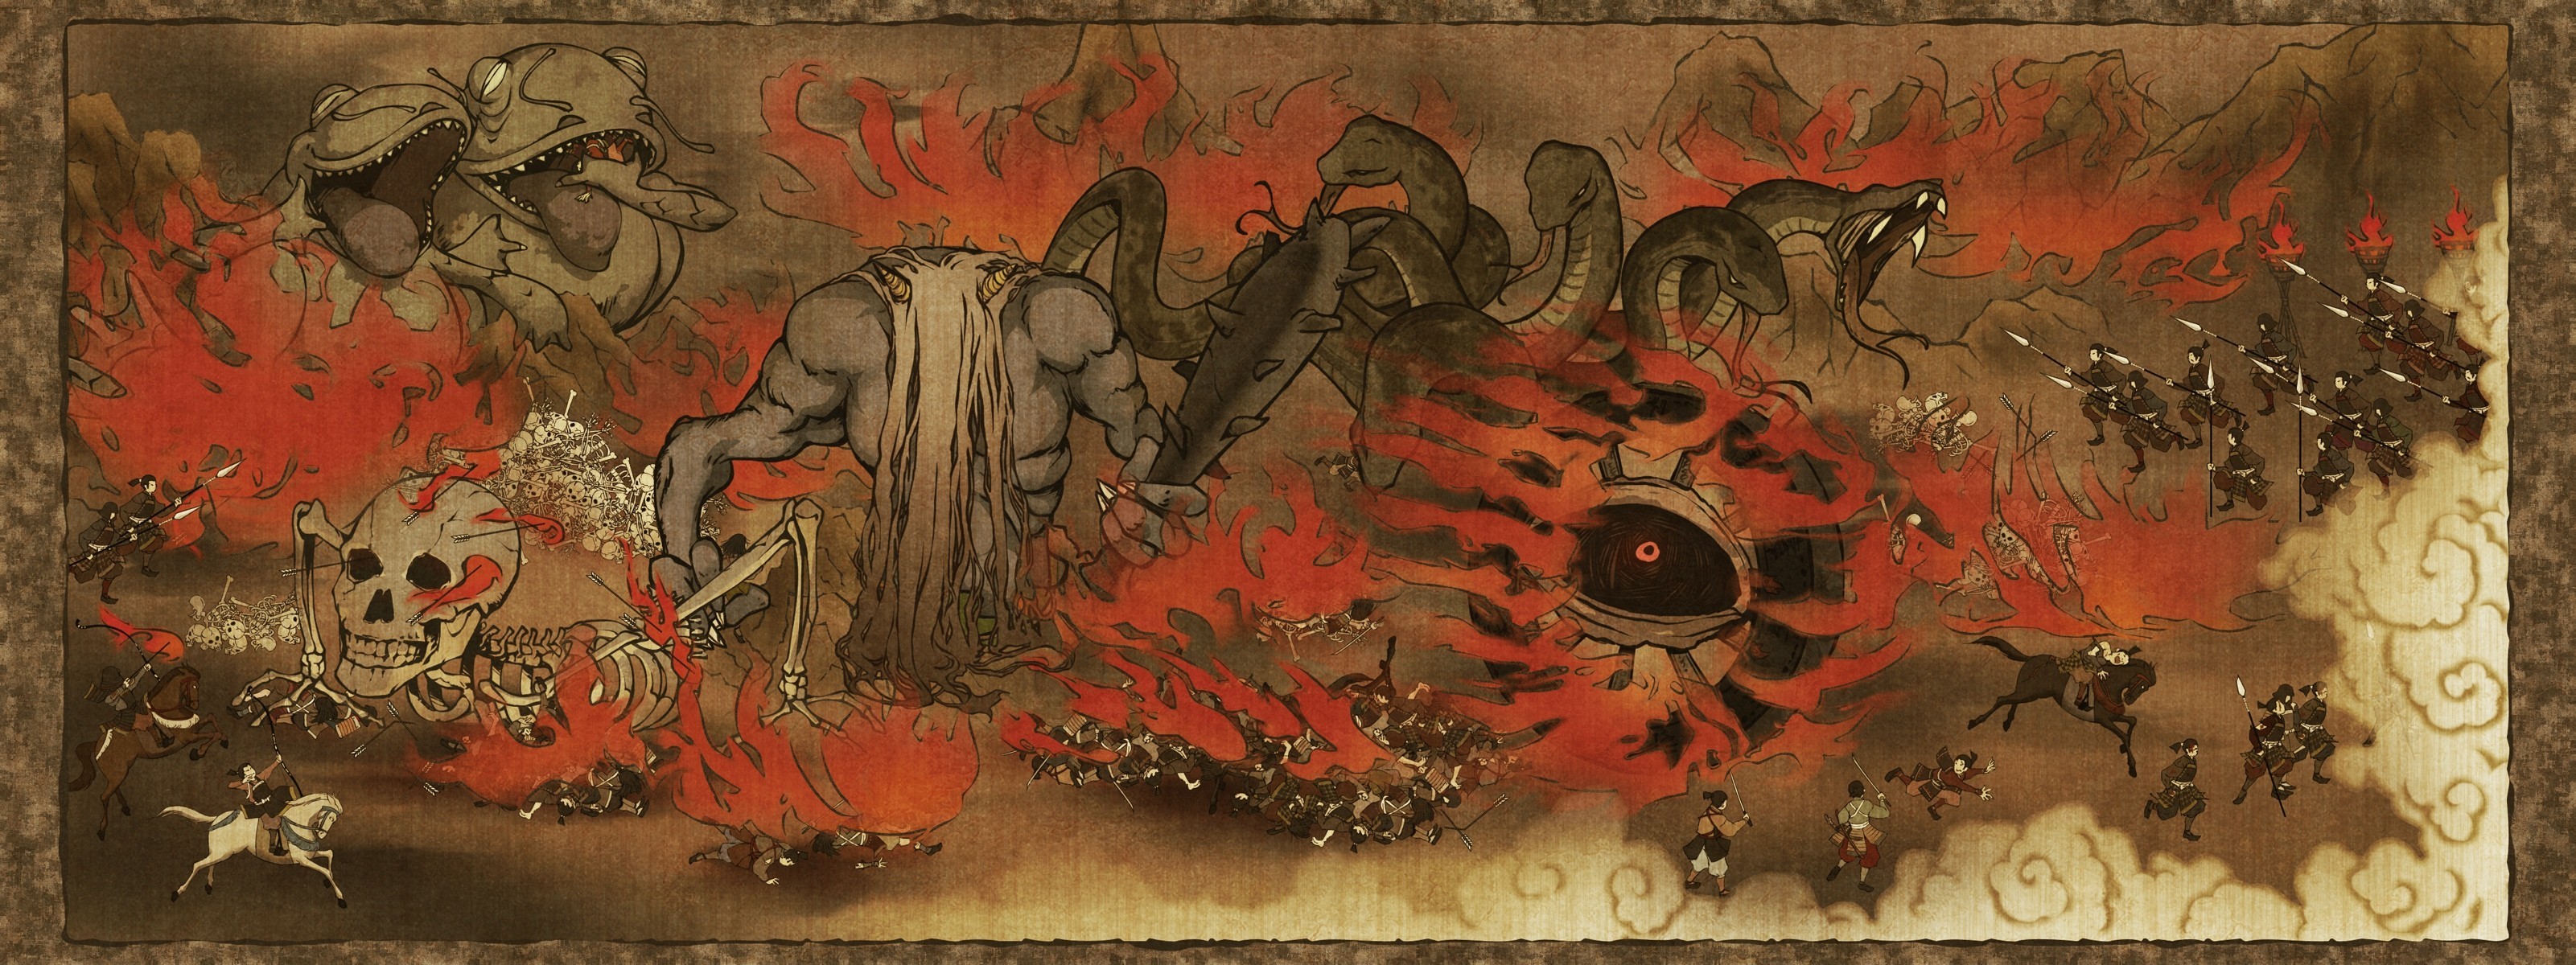 General 3202x1200 Japanese mythology snake artwork surreal skull bones fire